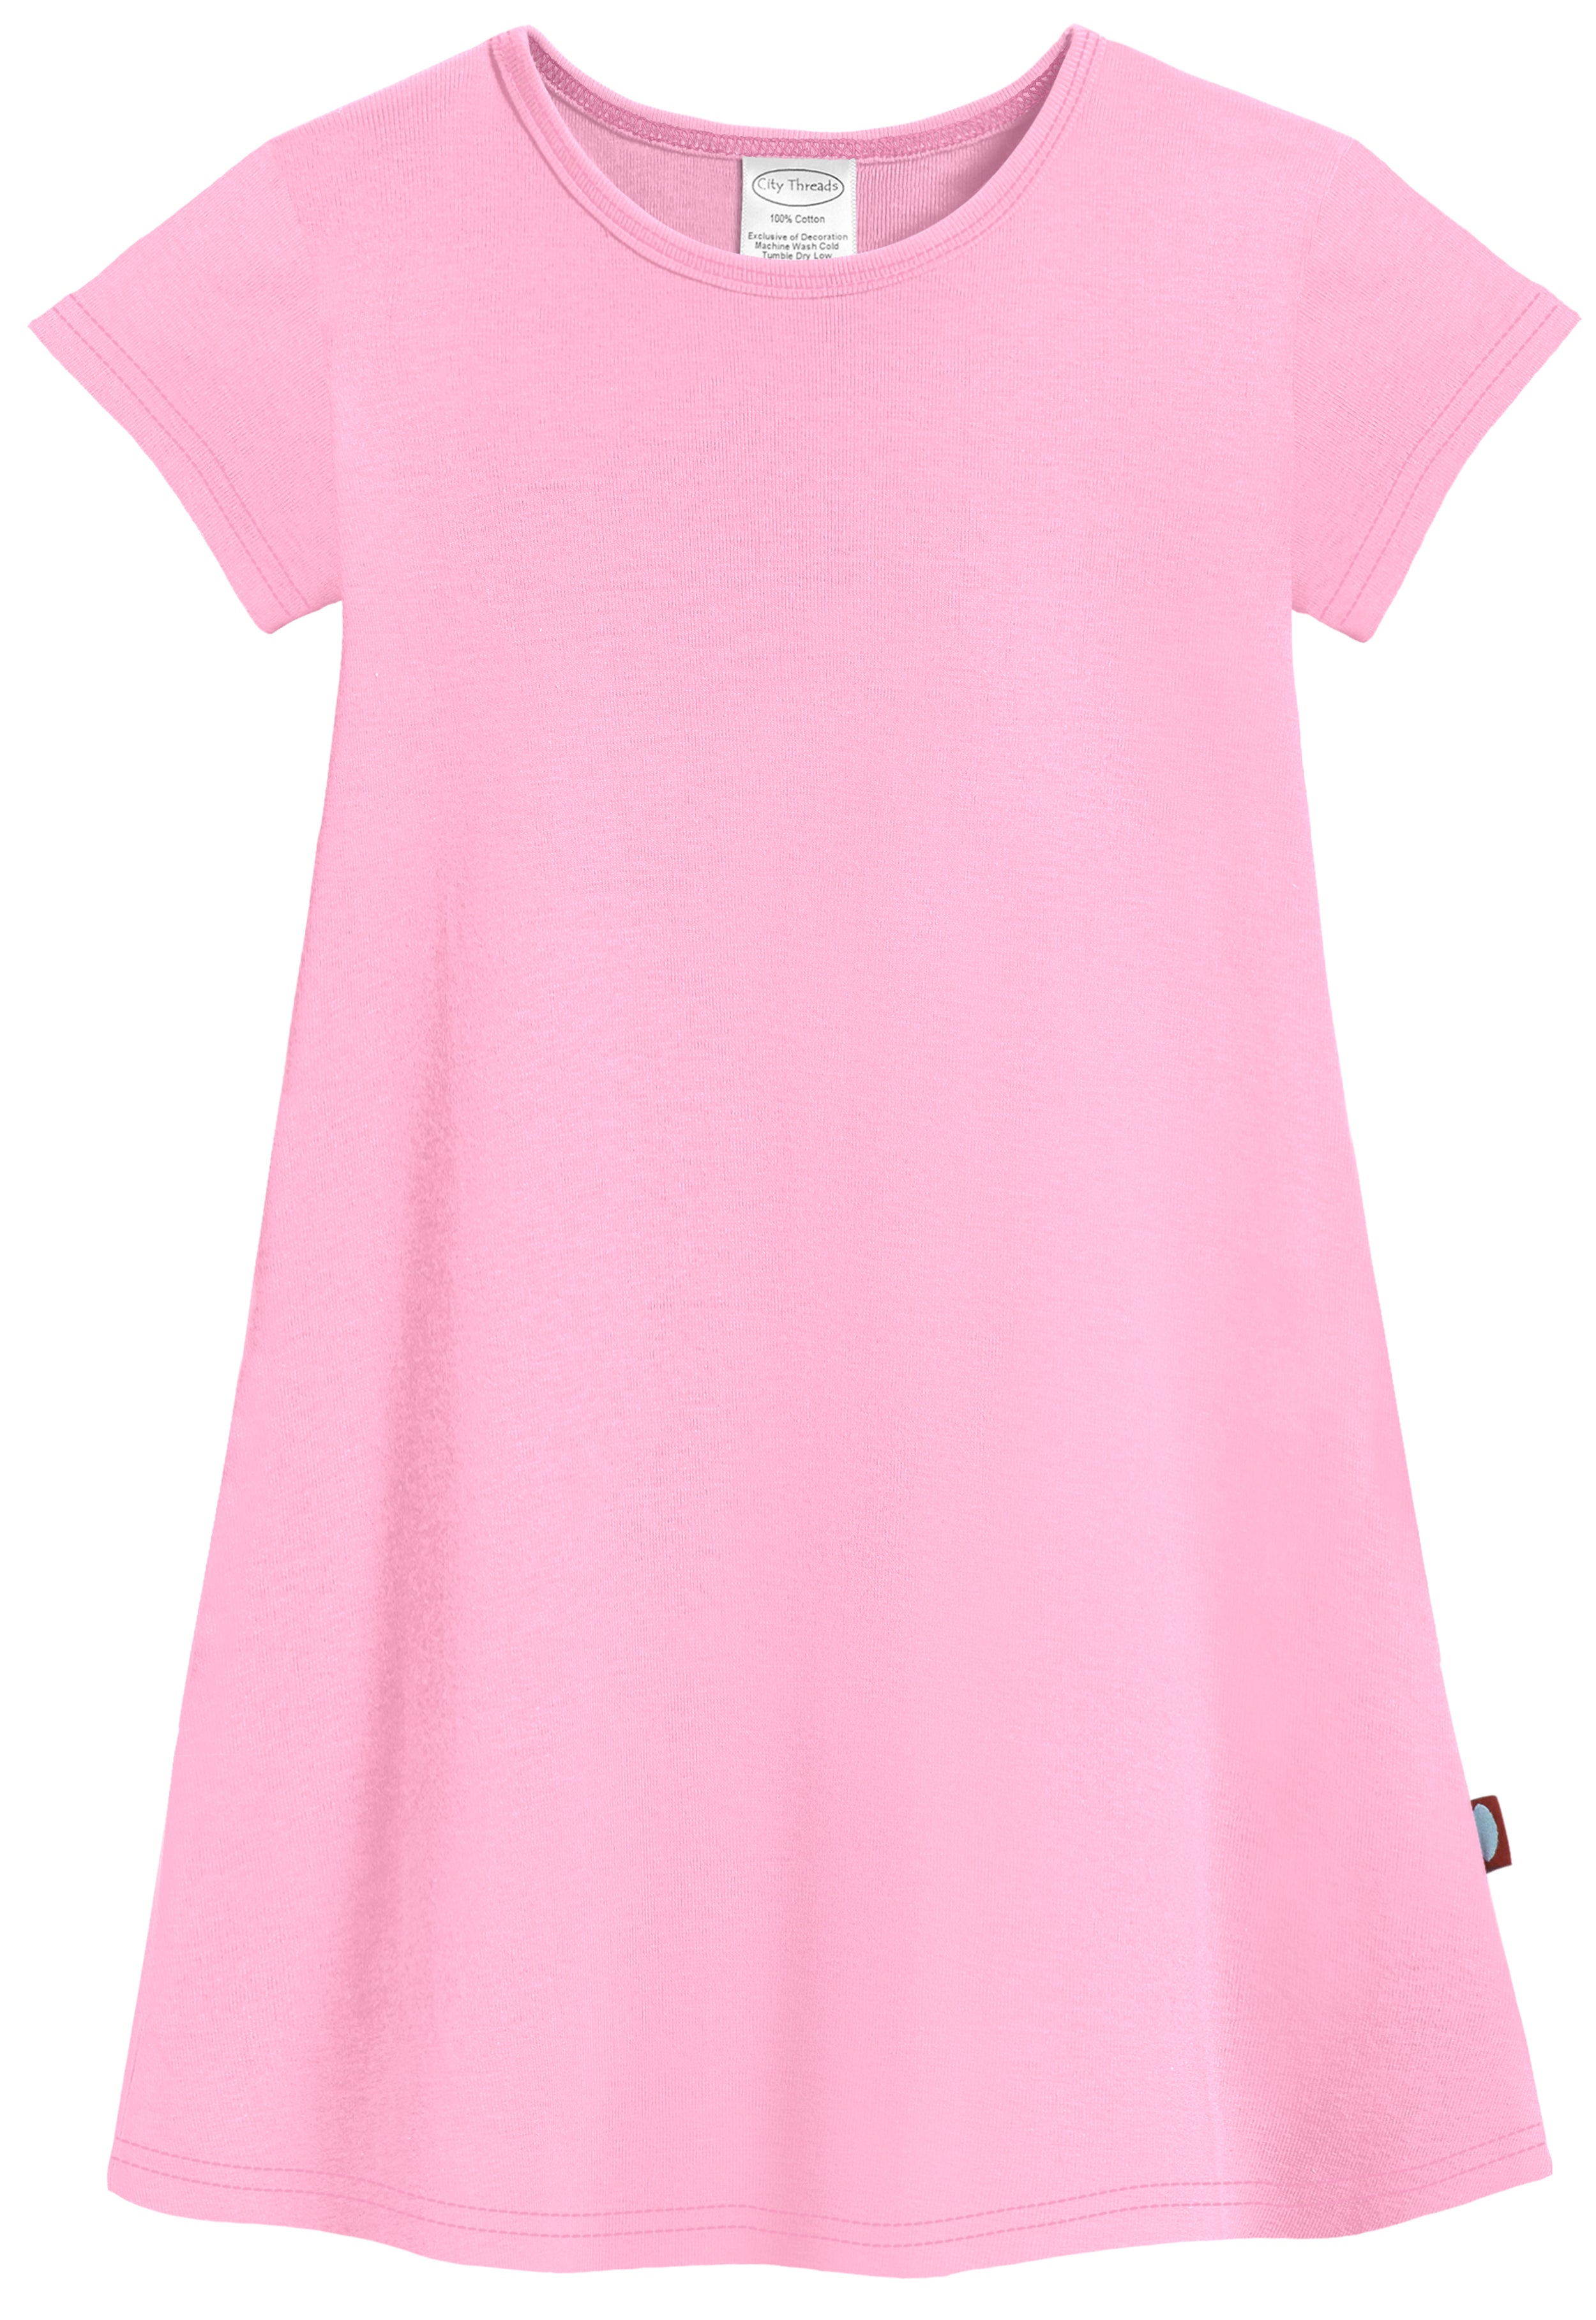 Women's Plain Pink Organic Cotton T-Shirt